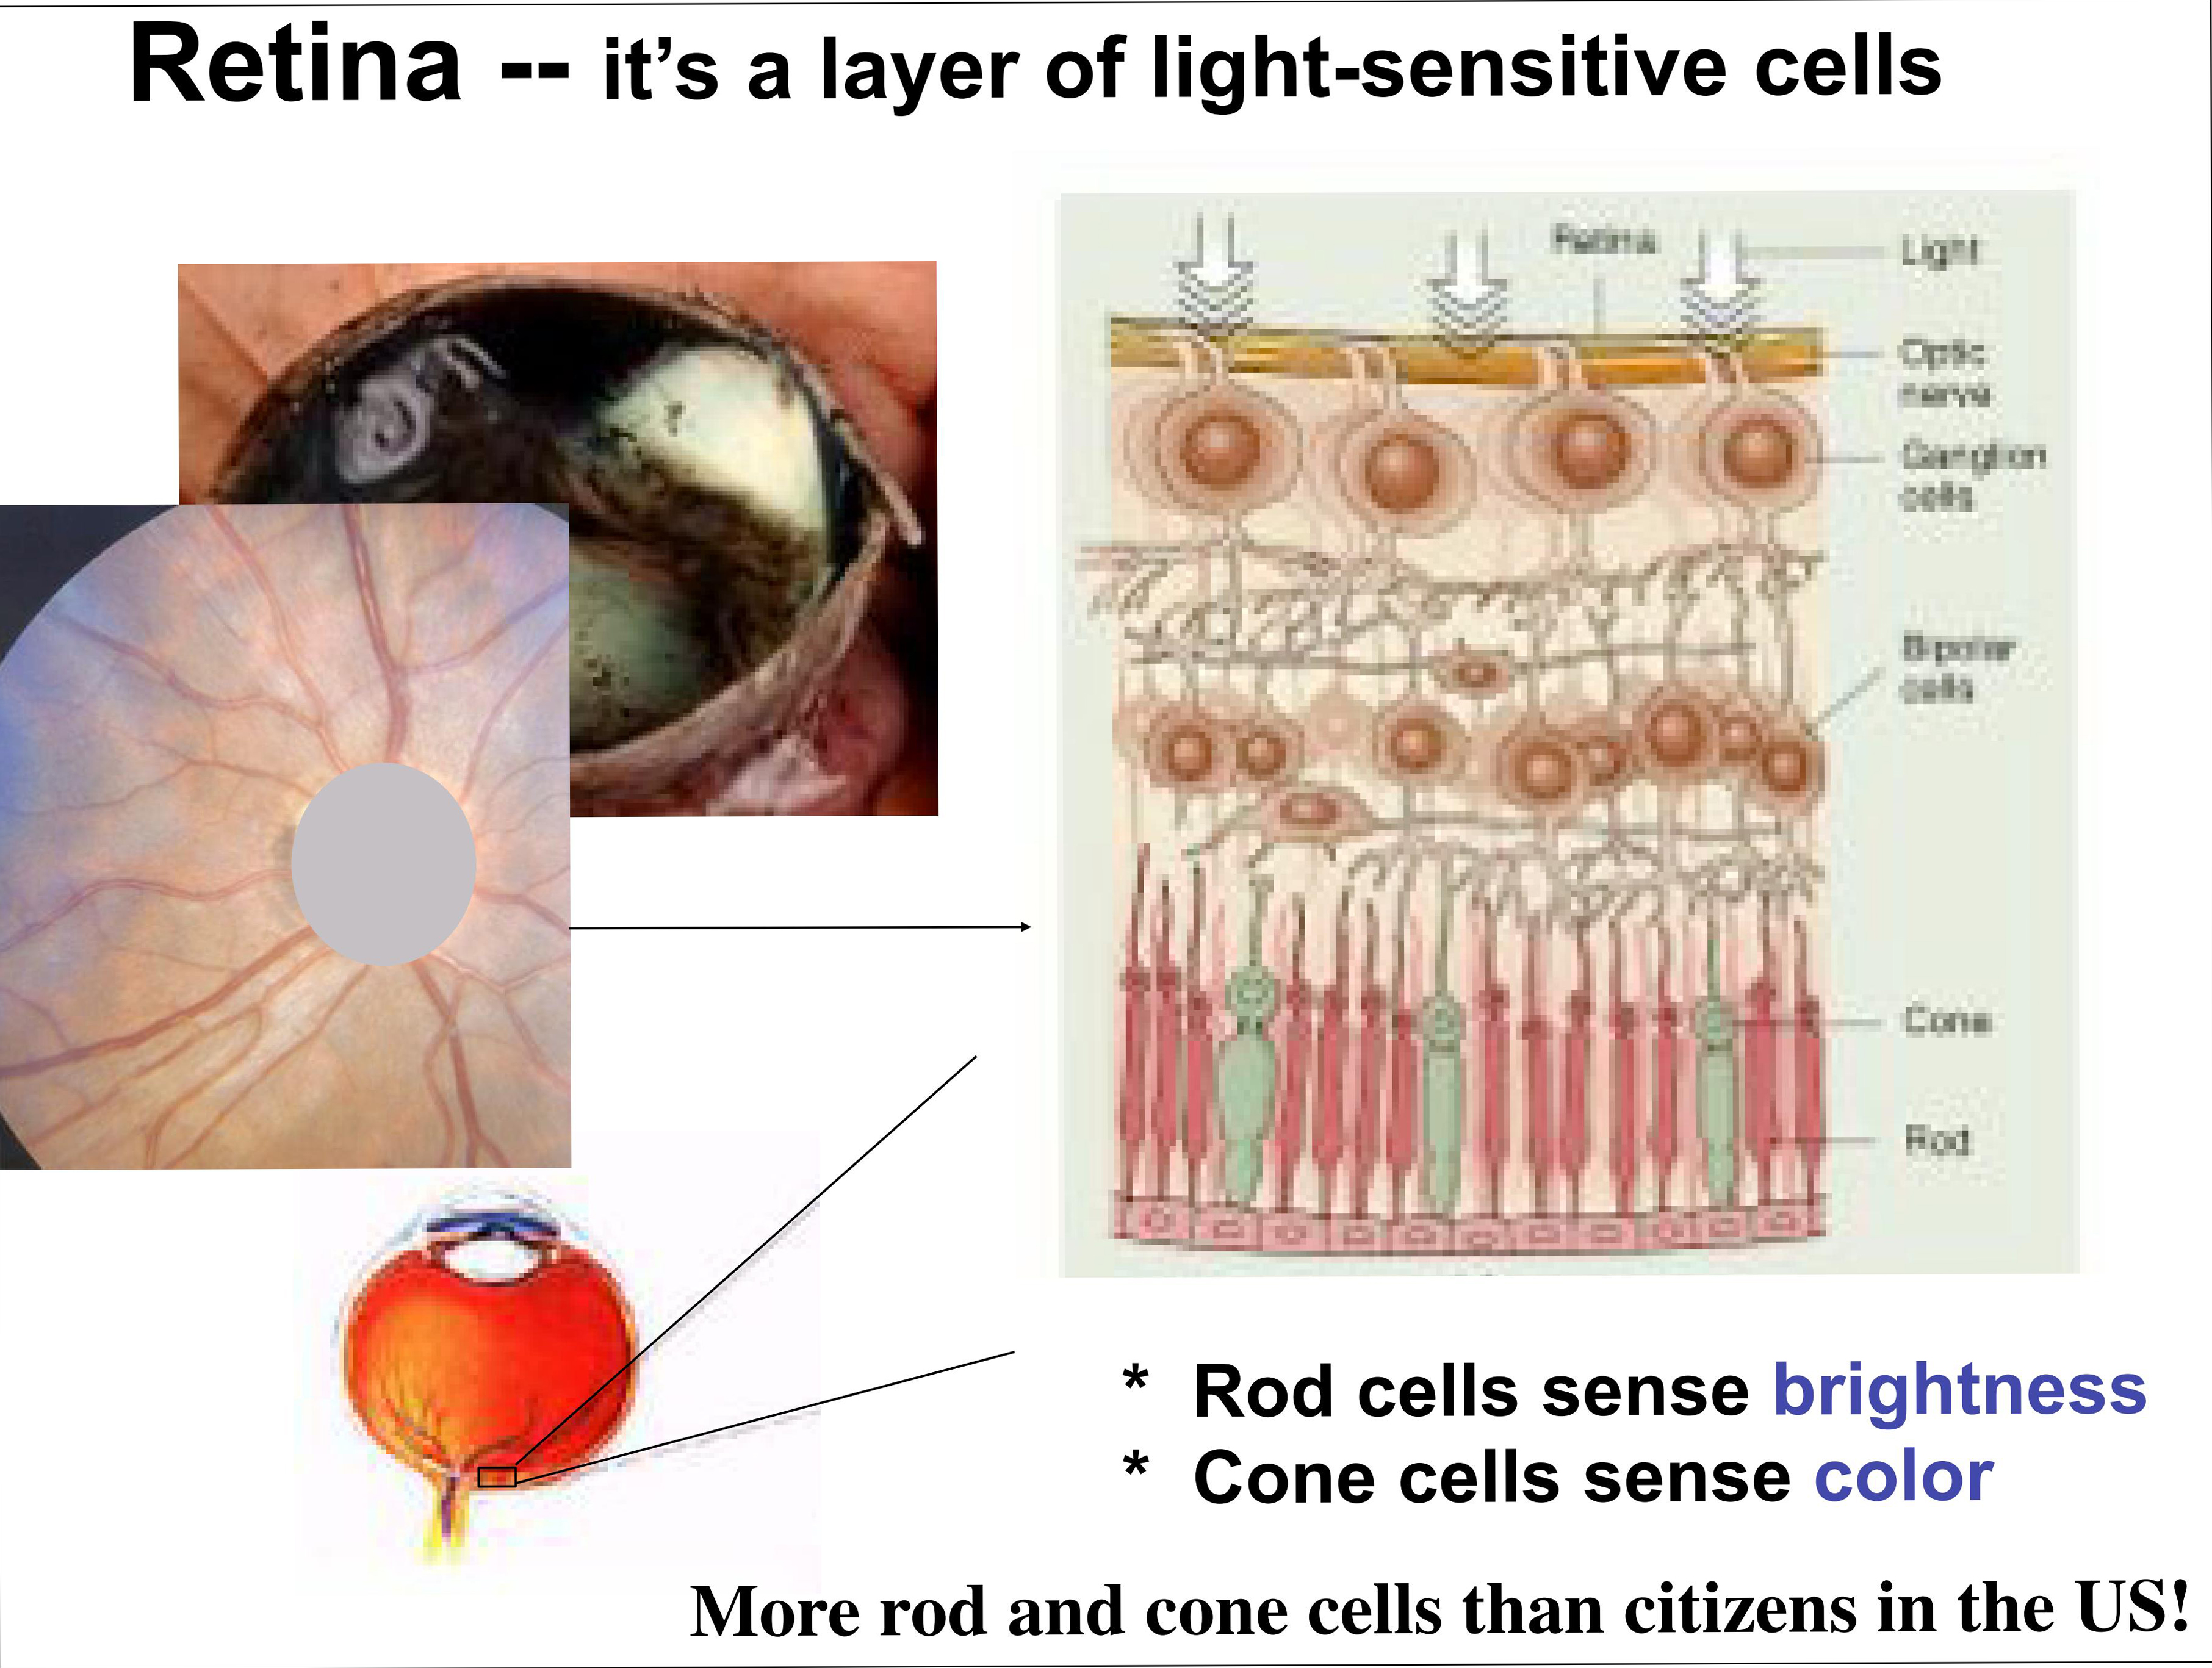 Retina -- It's a layer of light-sensitive cells